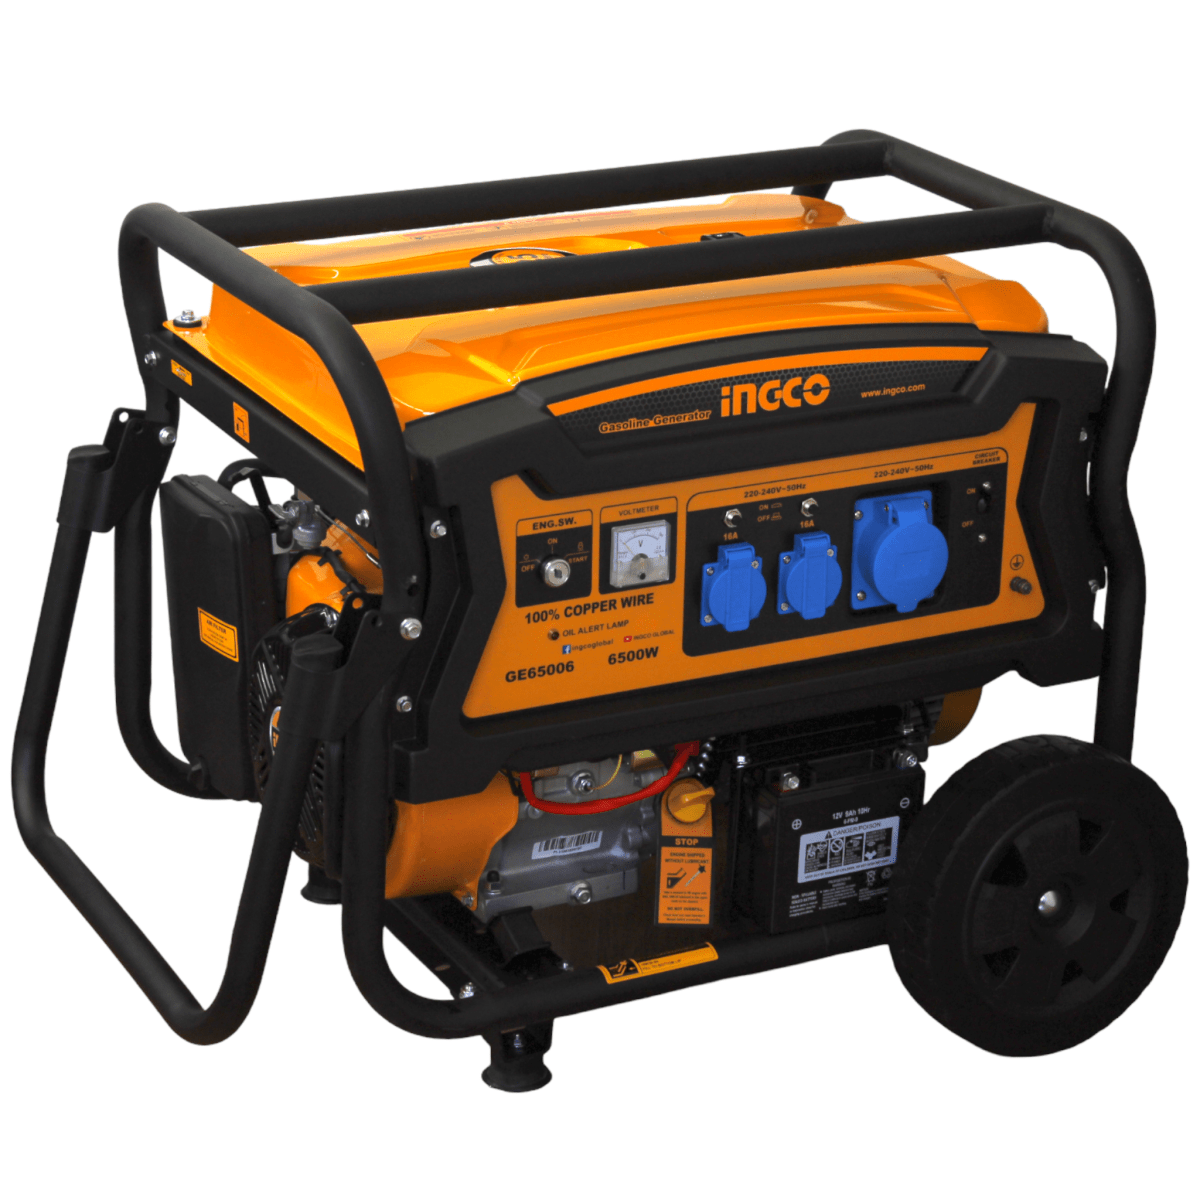 Ingco Gasoline Generator 7.5KW - GE75006 - Buy Online in Accra, Ghana at Supply Master Generator Buy Tools hardware Building materials